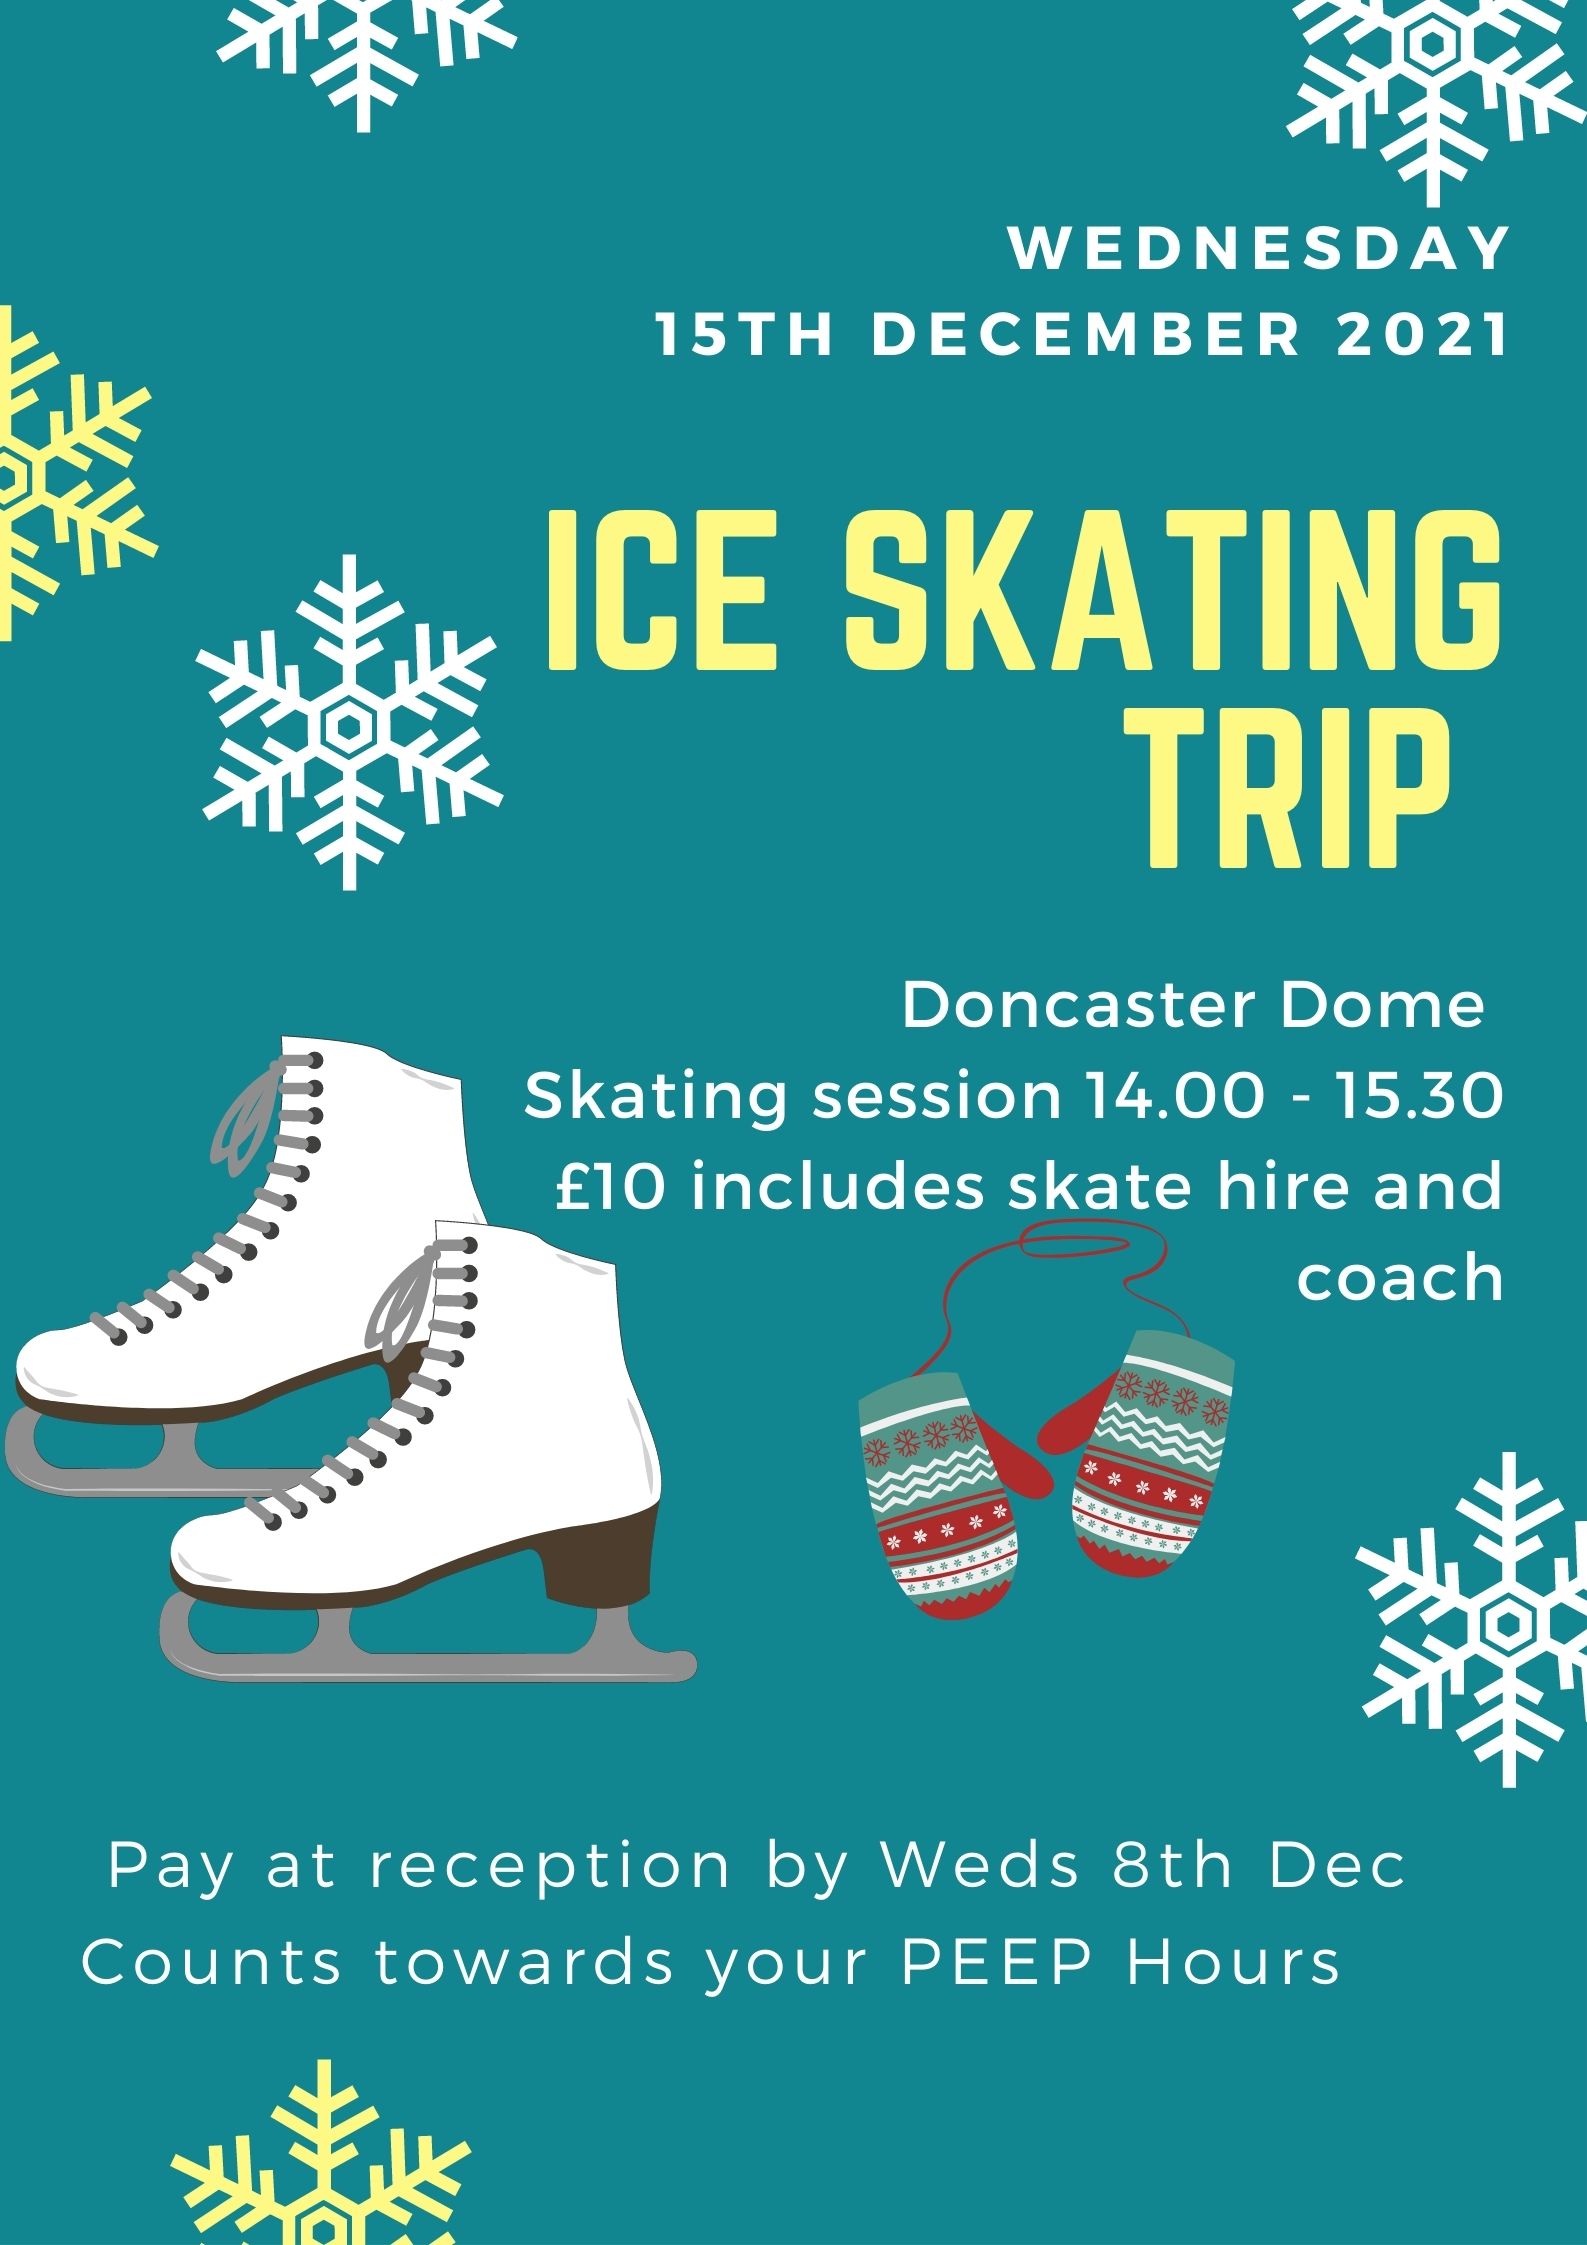 Ice skating trip Doncaster Dome 15 December